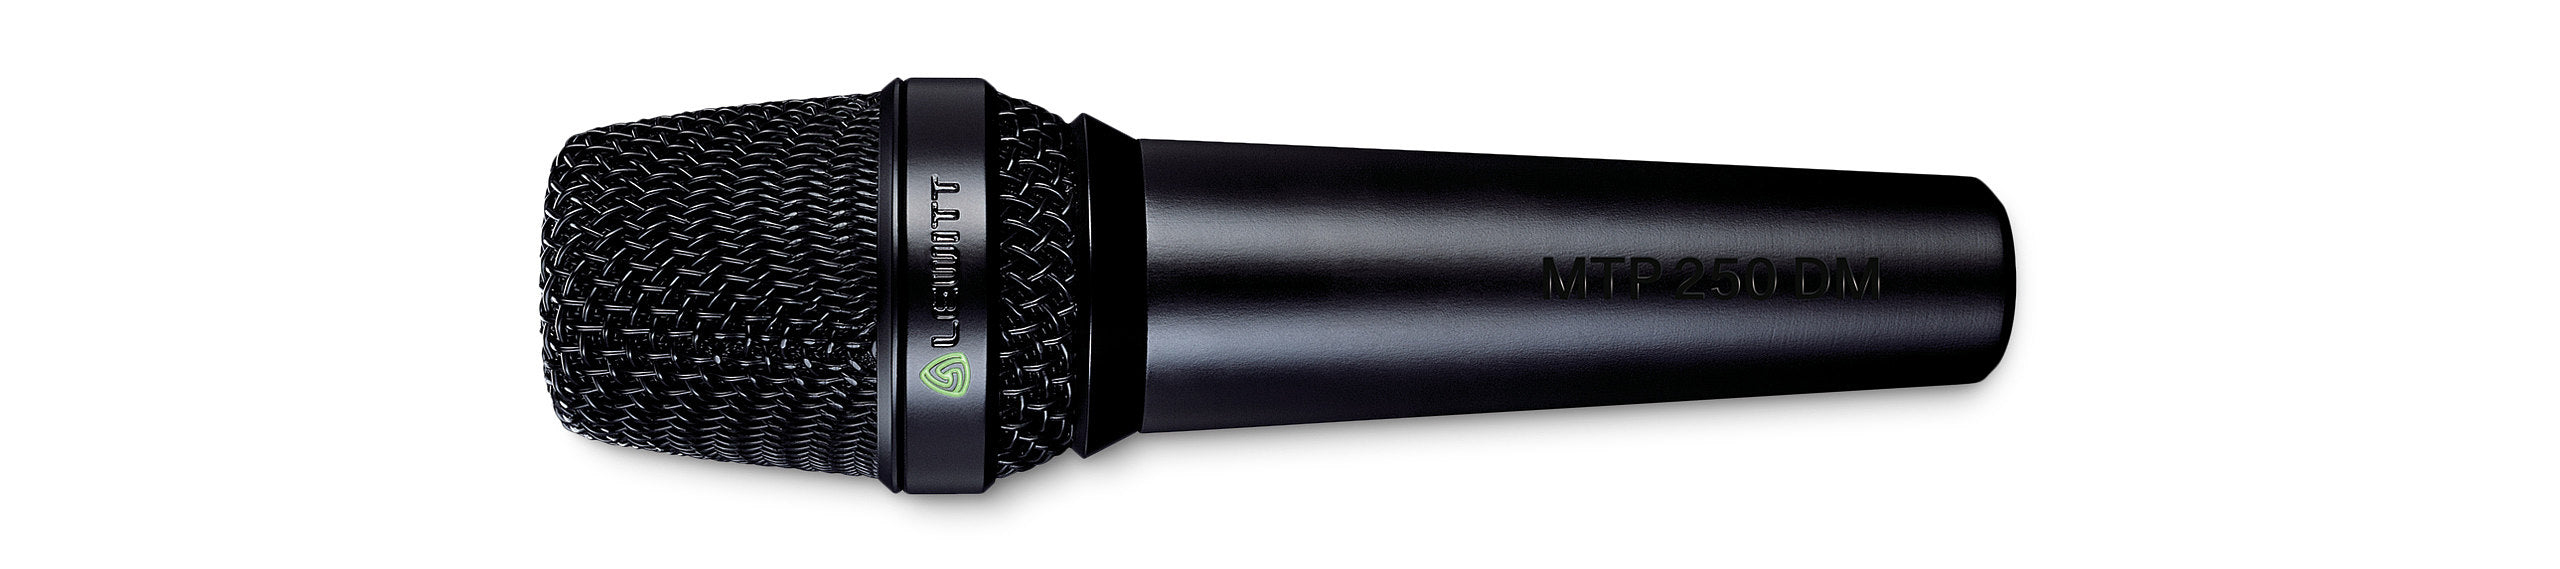 Lewitt MTP 250 DM Dynamic Microphone - Microphones - Professional Audio Design, Inc